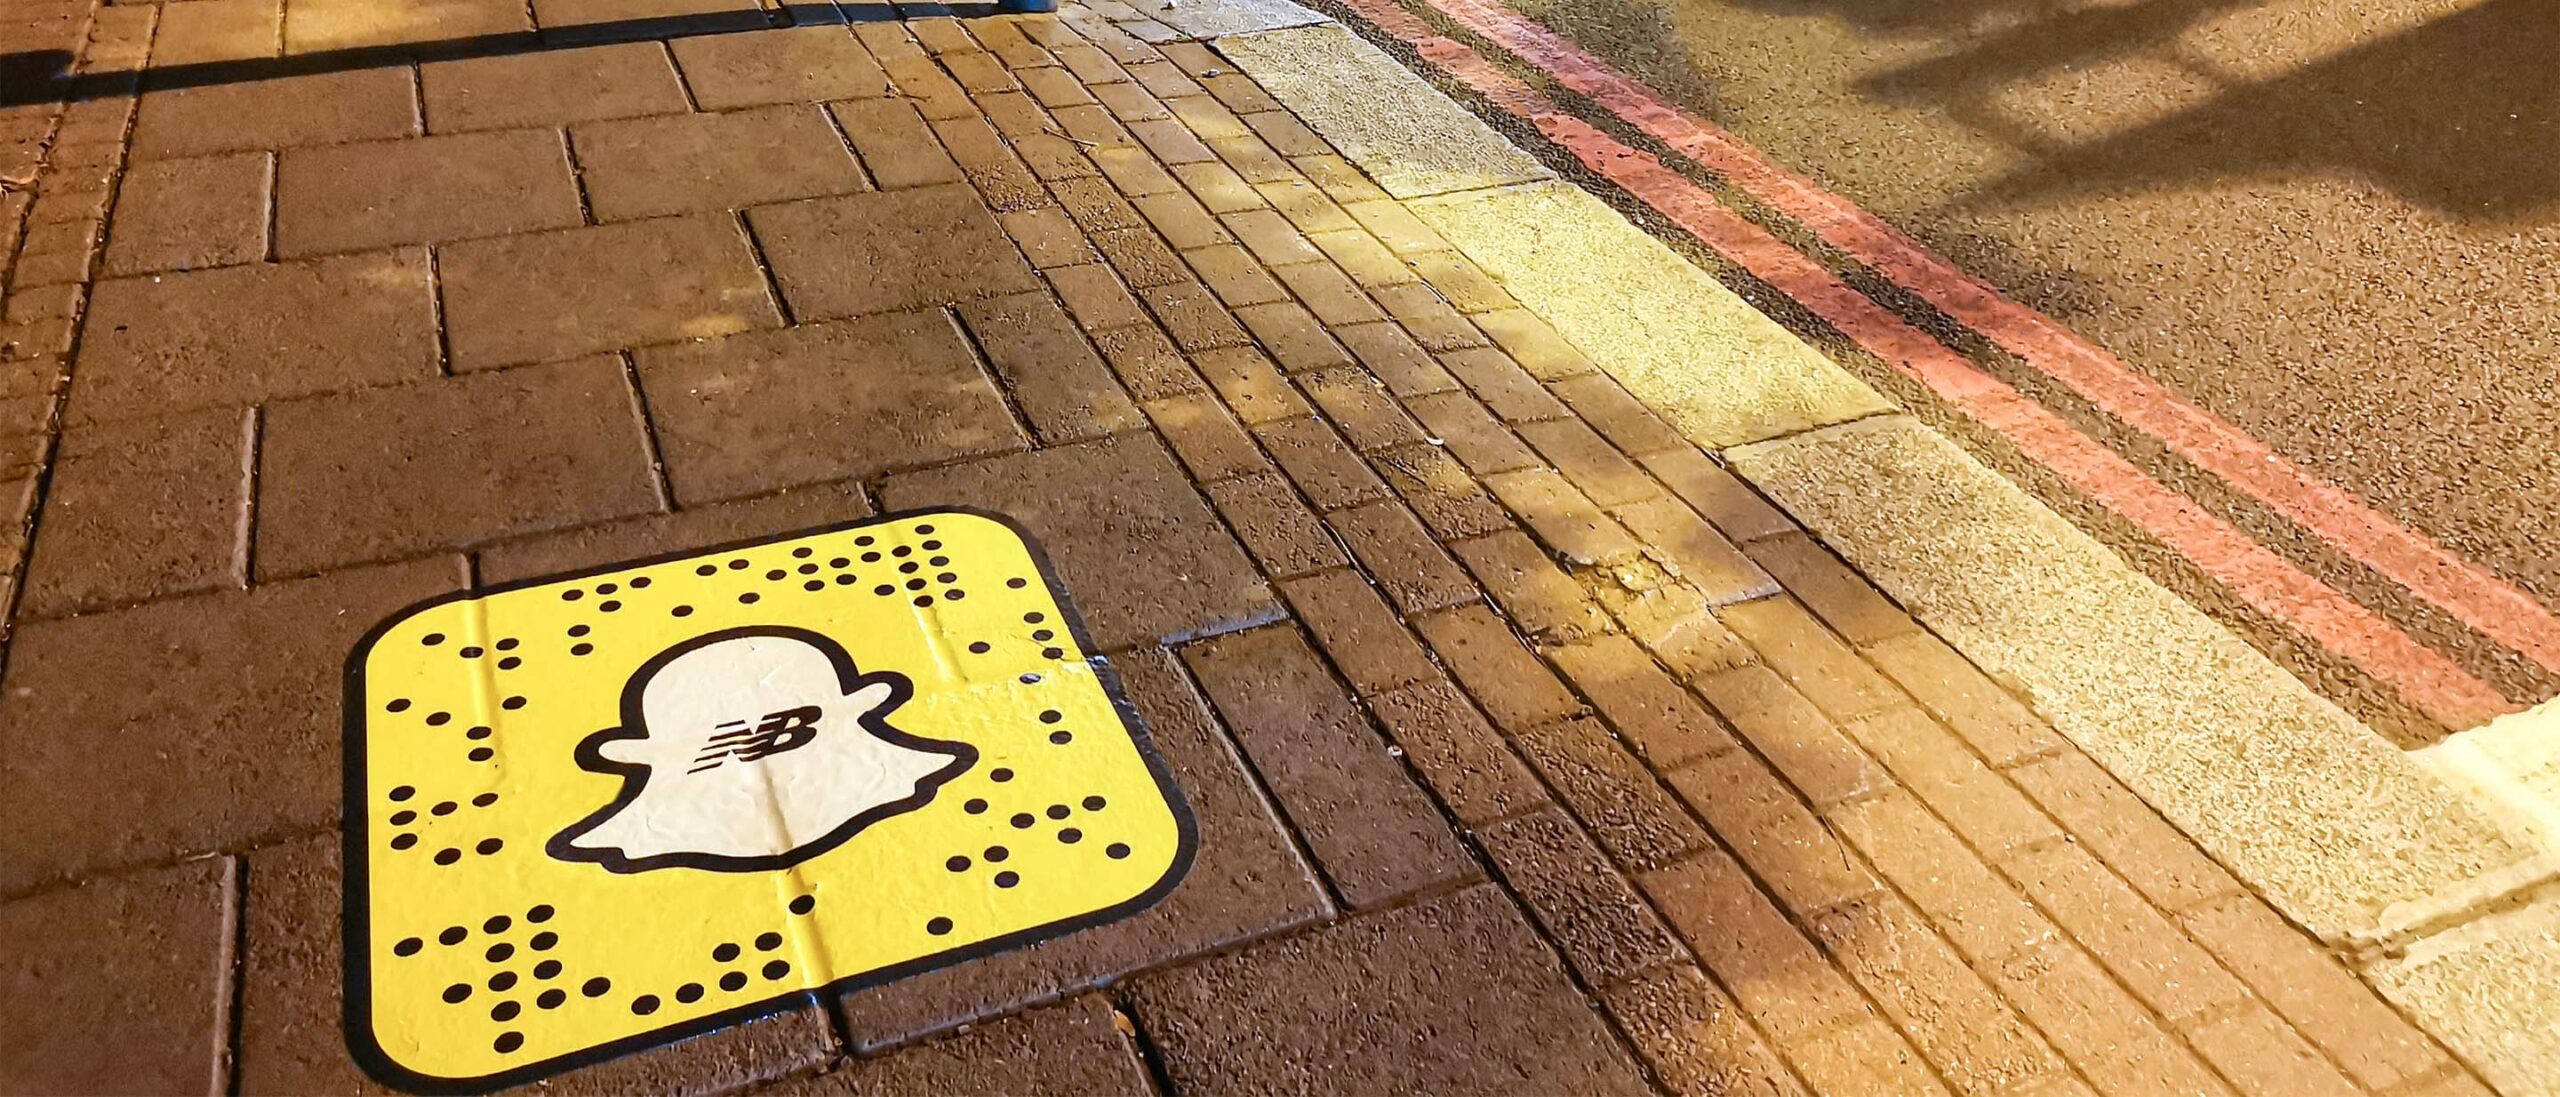 New Balance Snapchat vinyl on pavement